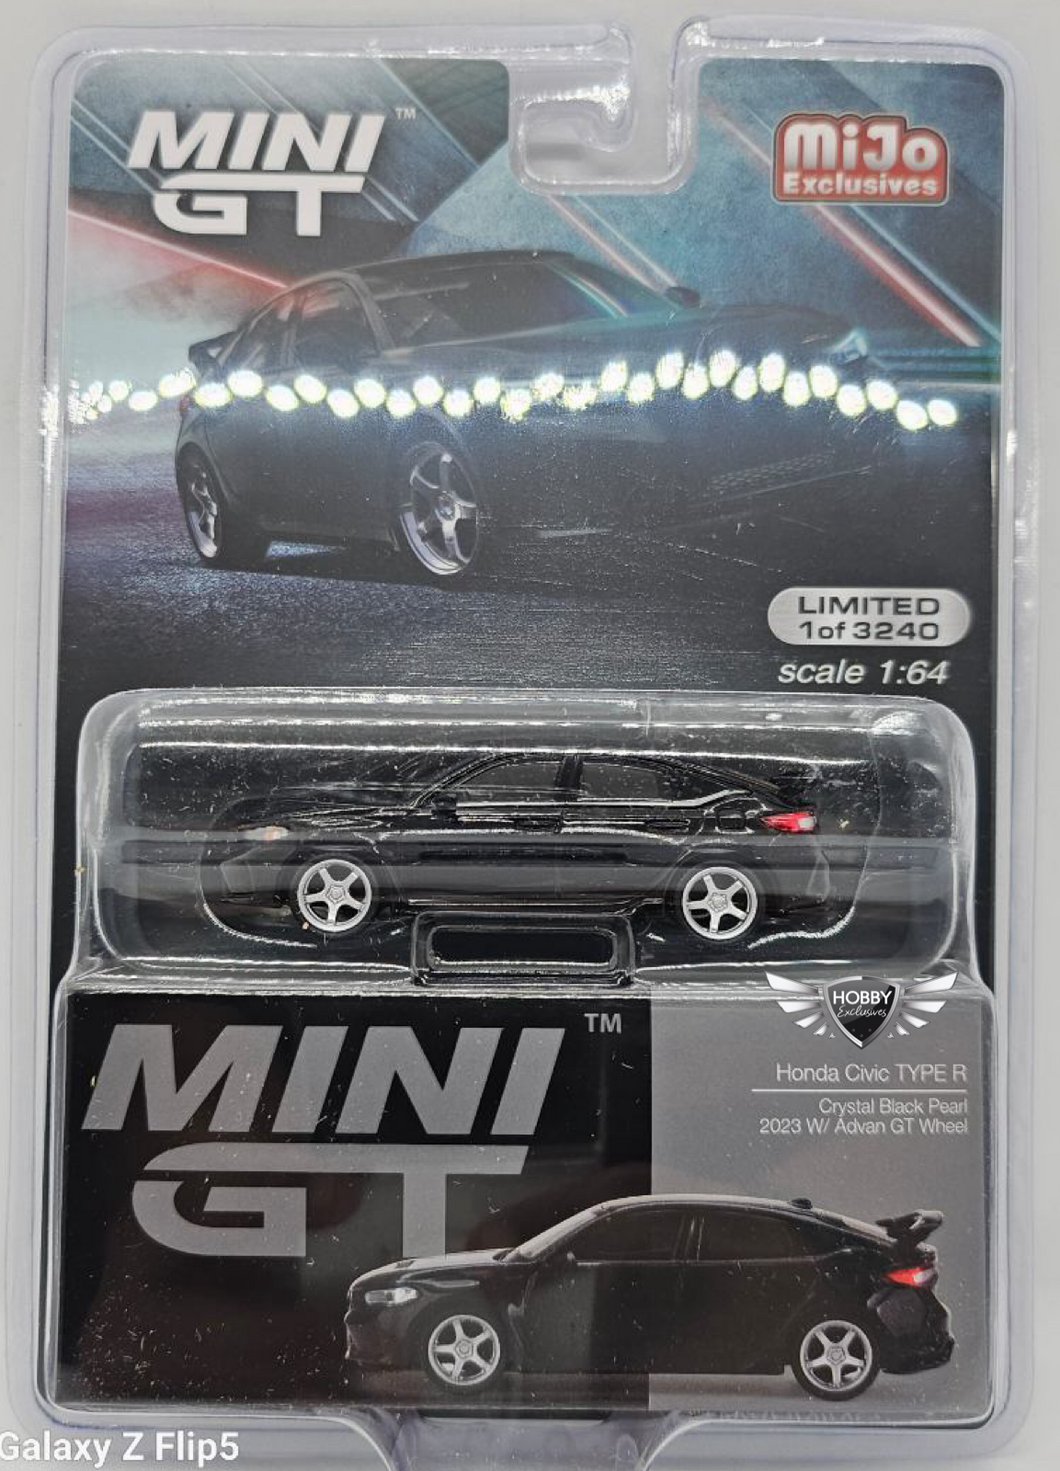 Honda Civic Type R Crystal Black Pearl 2023 W/ Advan GT Wheel #585 Mini GT MiJo Exclusives